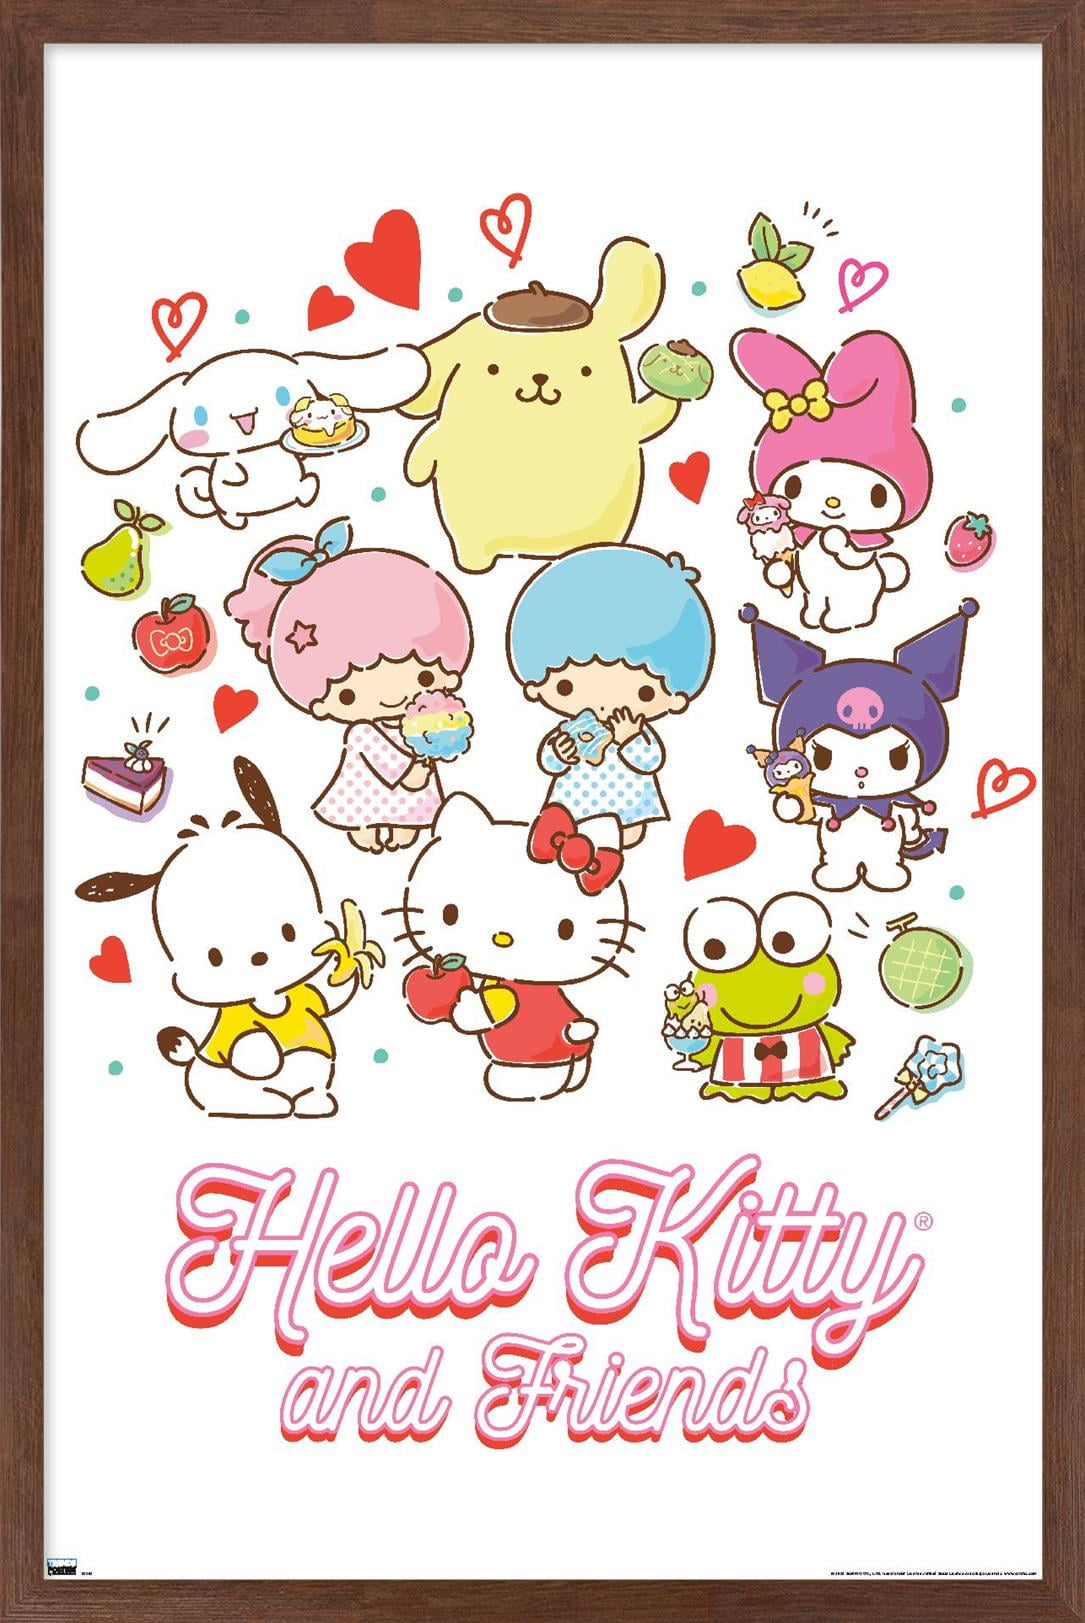 Trends International Hello Kitty and Friends - Kuromi Wall Poster, 22.37 x  34.00, Unframed Version